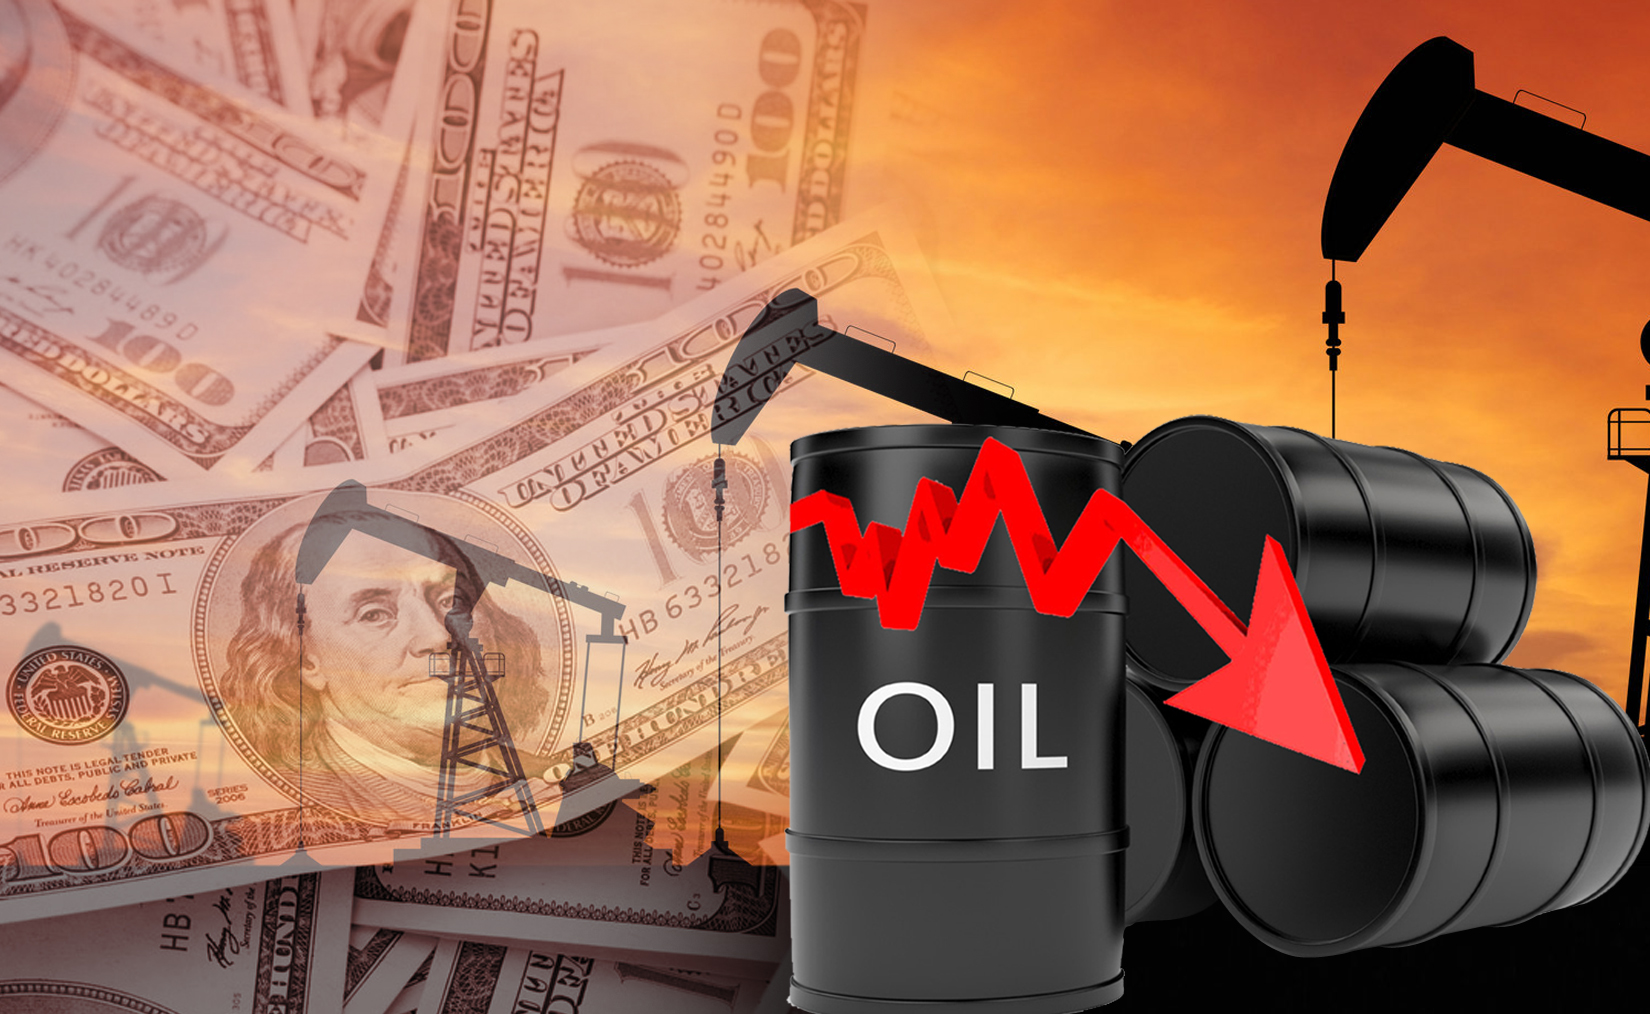 Kuwait crude oil drop 77 cents Tues. to USD 92.66 pb - KPC                                                                                                                                                                                                